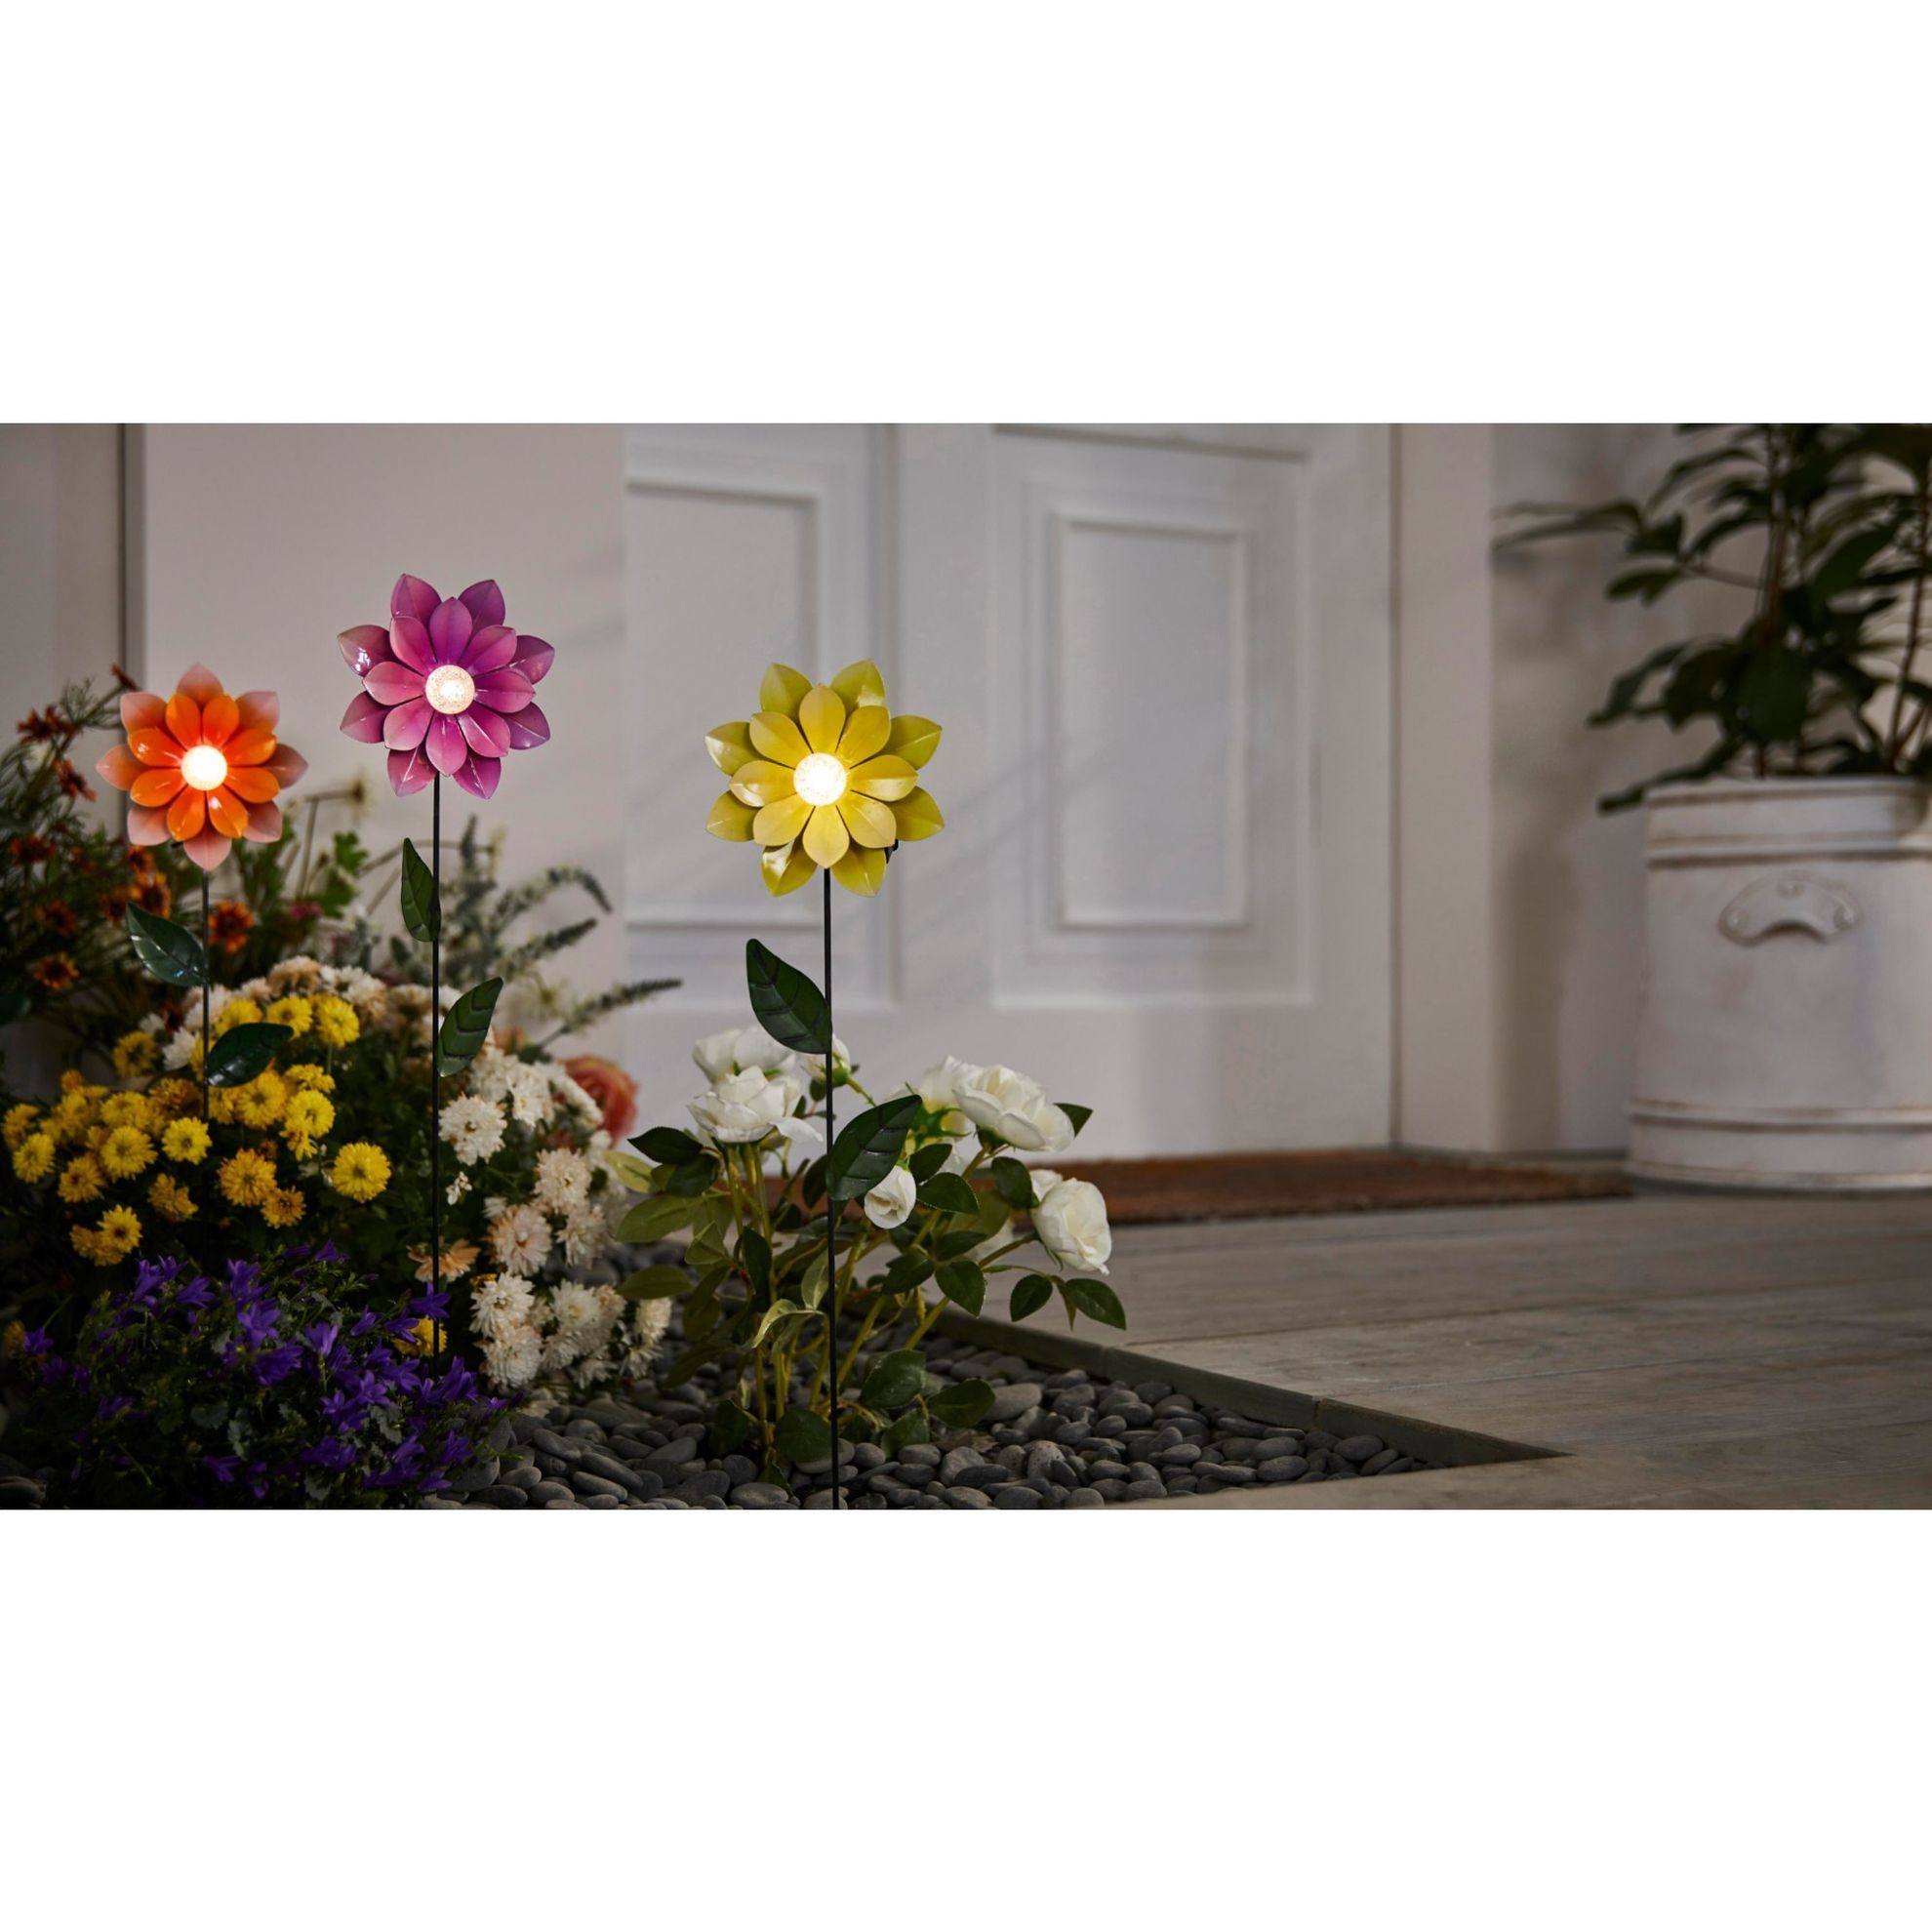 Solarleuchten-Set, 3-tlg. Flower Power bestellen | Weltbild.de